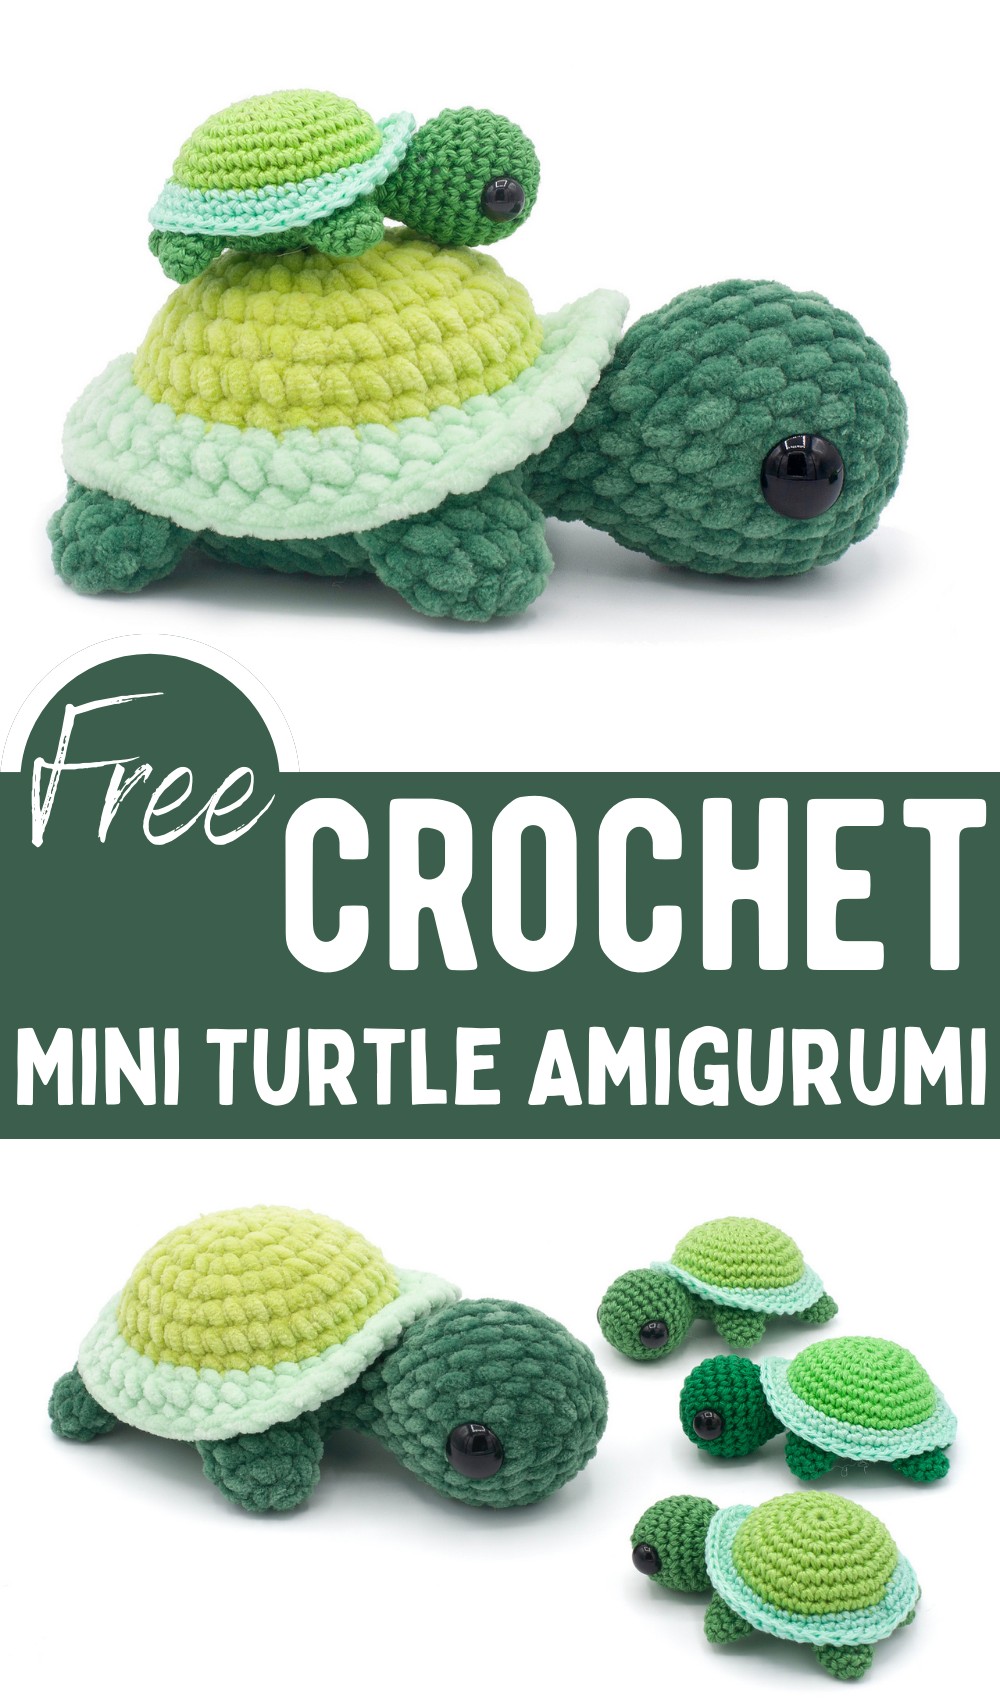 Mini Turtle Amigurumi